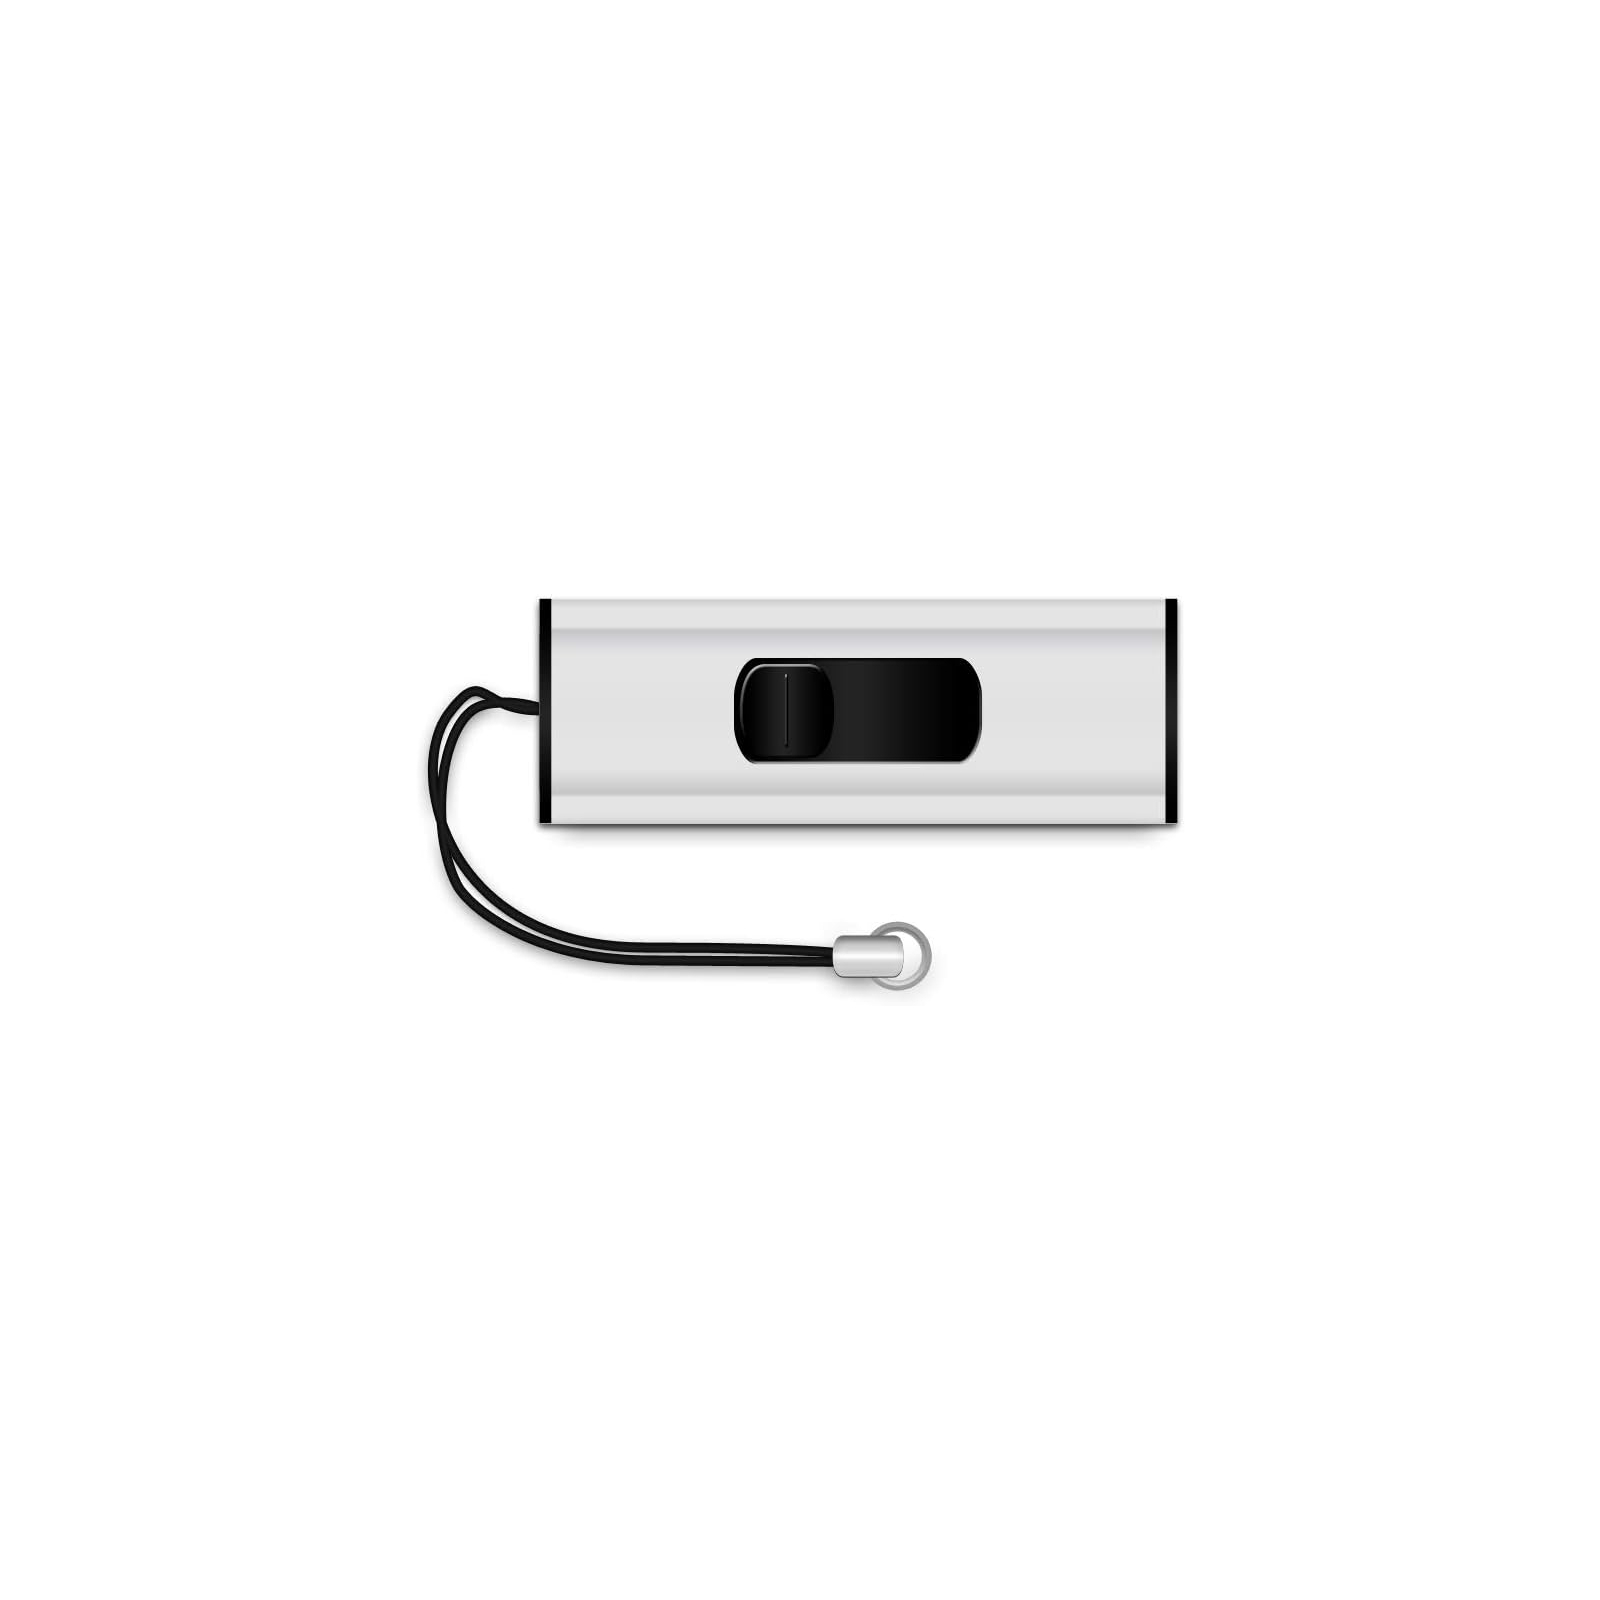 USB флеш накопитель Mediarange 64GB Black/Silver USB 3.0 (MR917) изображение 2